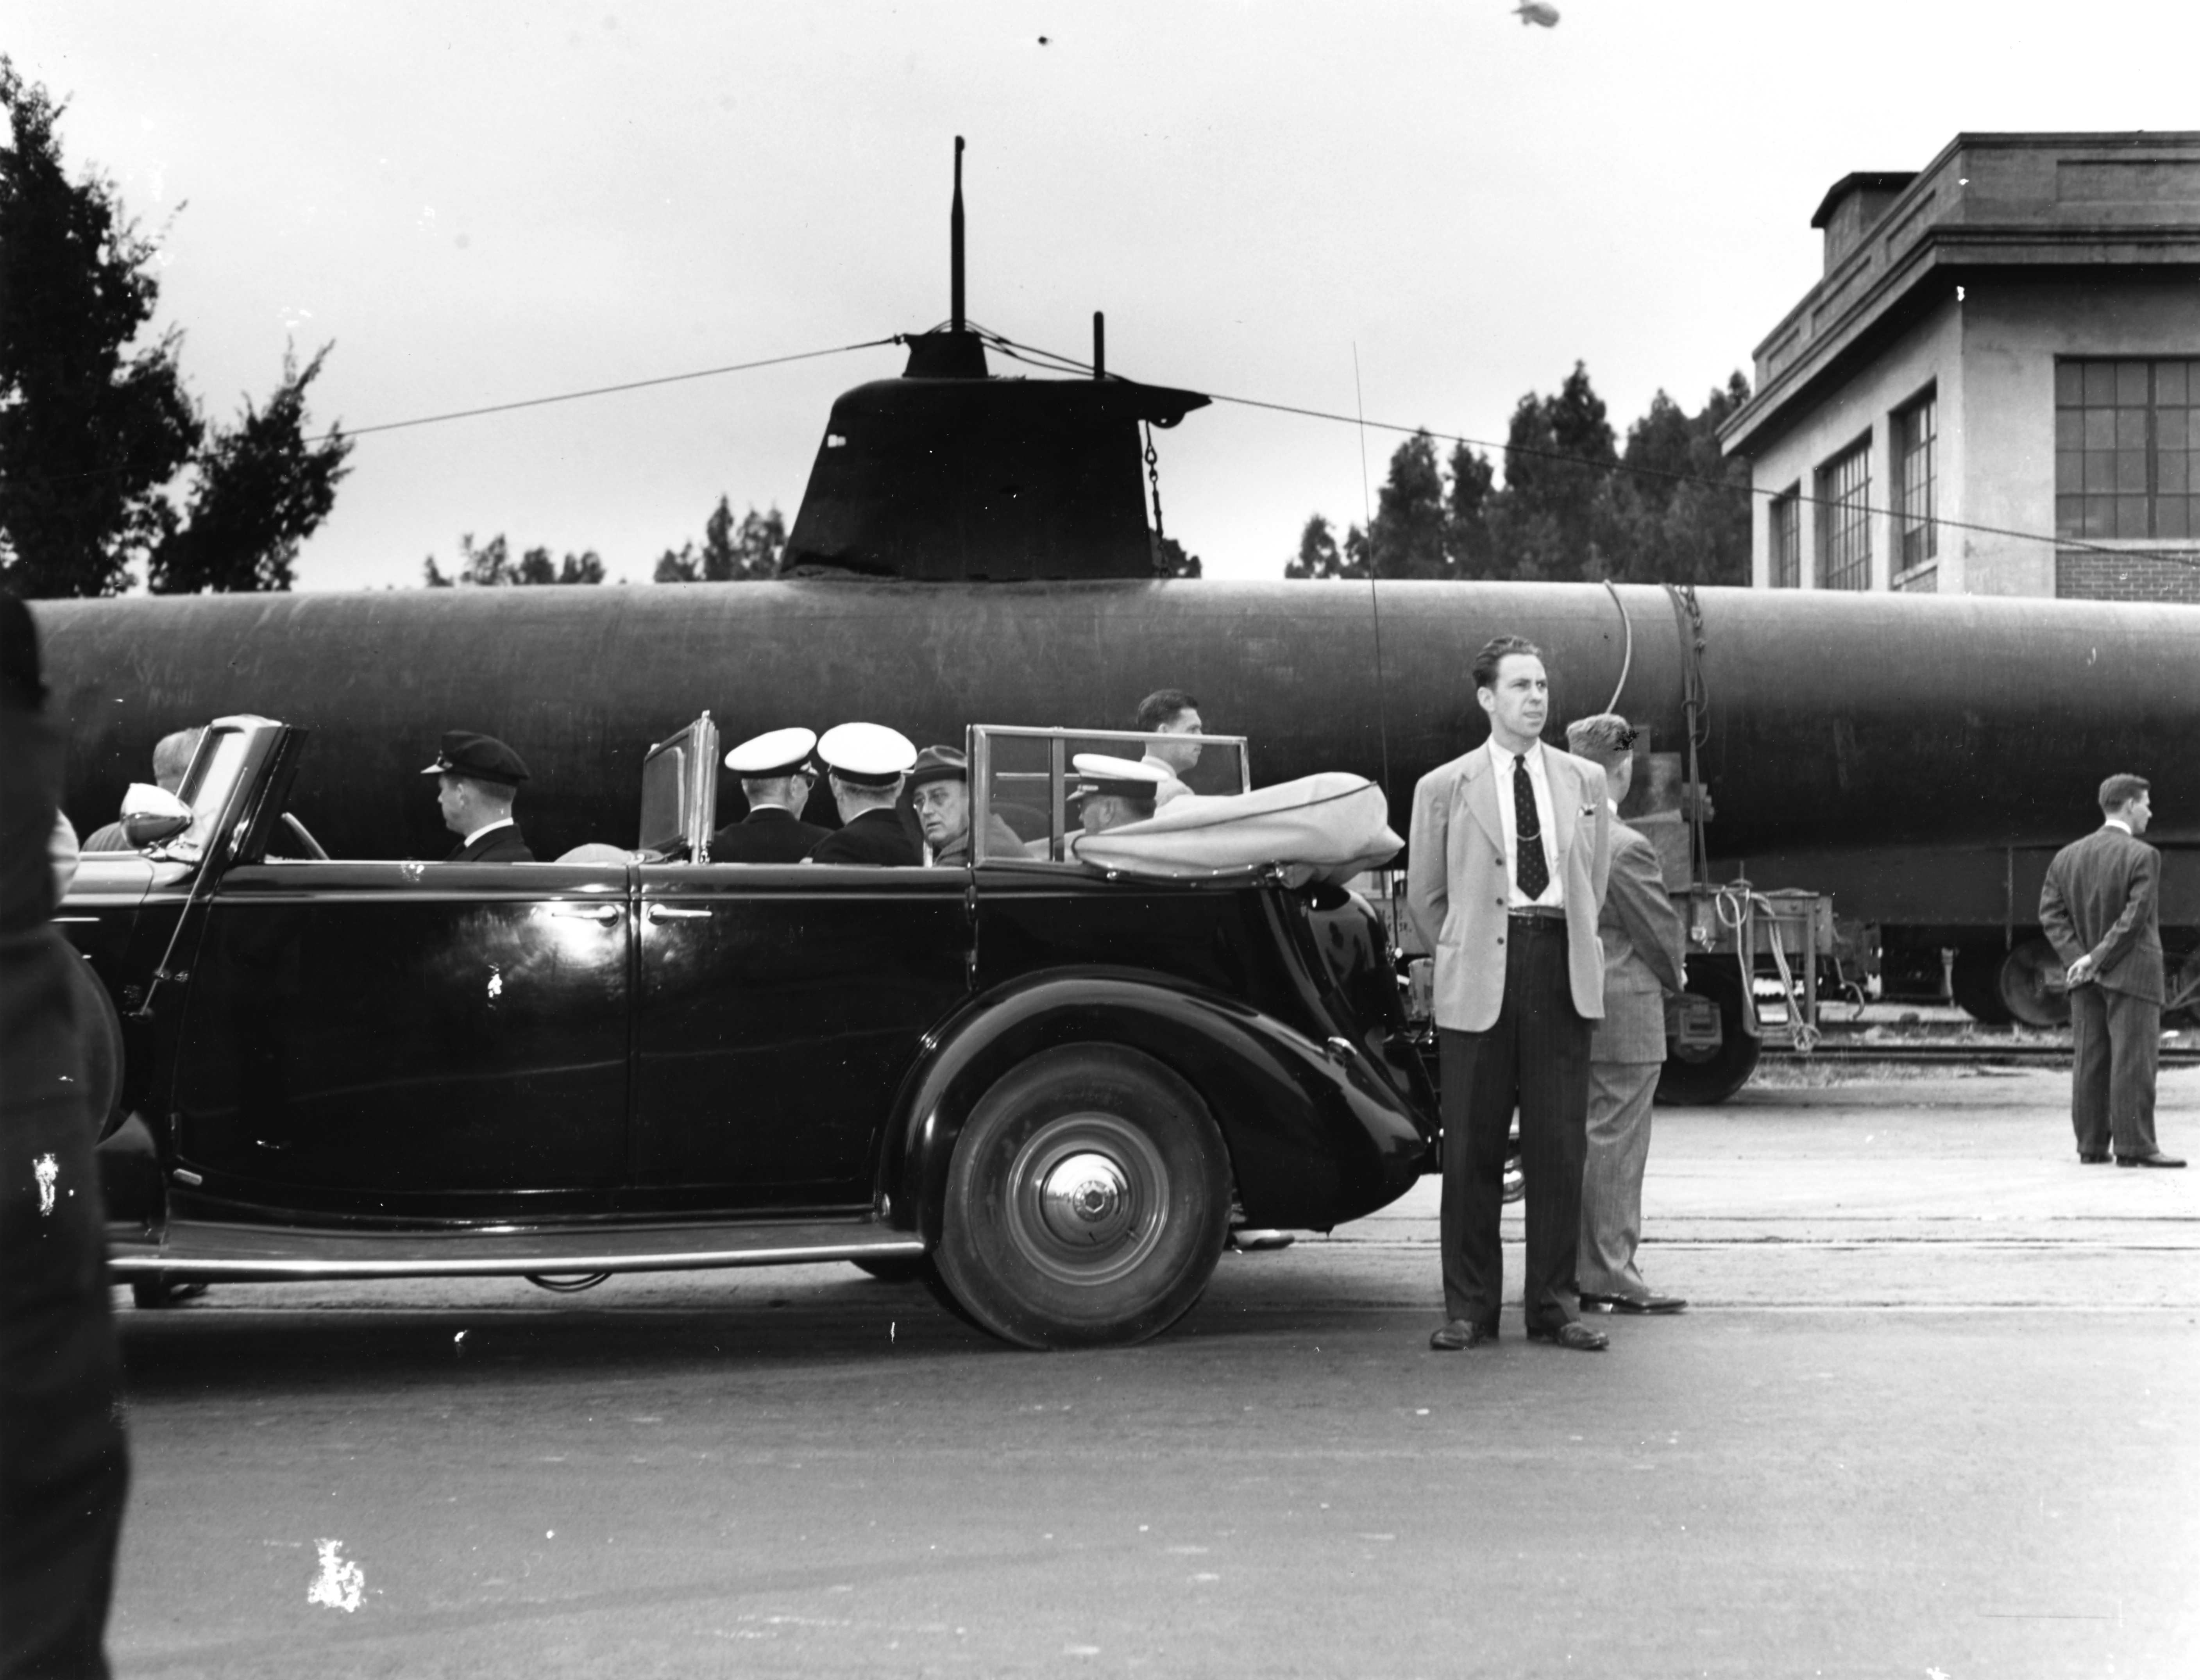 Roosevelt touring Mare Island Naval Shipyard, Vallejo, California, United States, 24 Sep 1942, with Japanese midget submarine Ha-19 in background